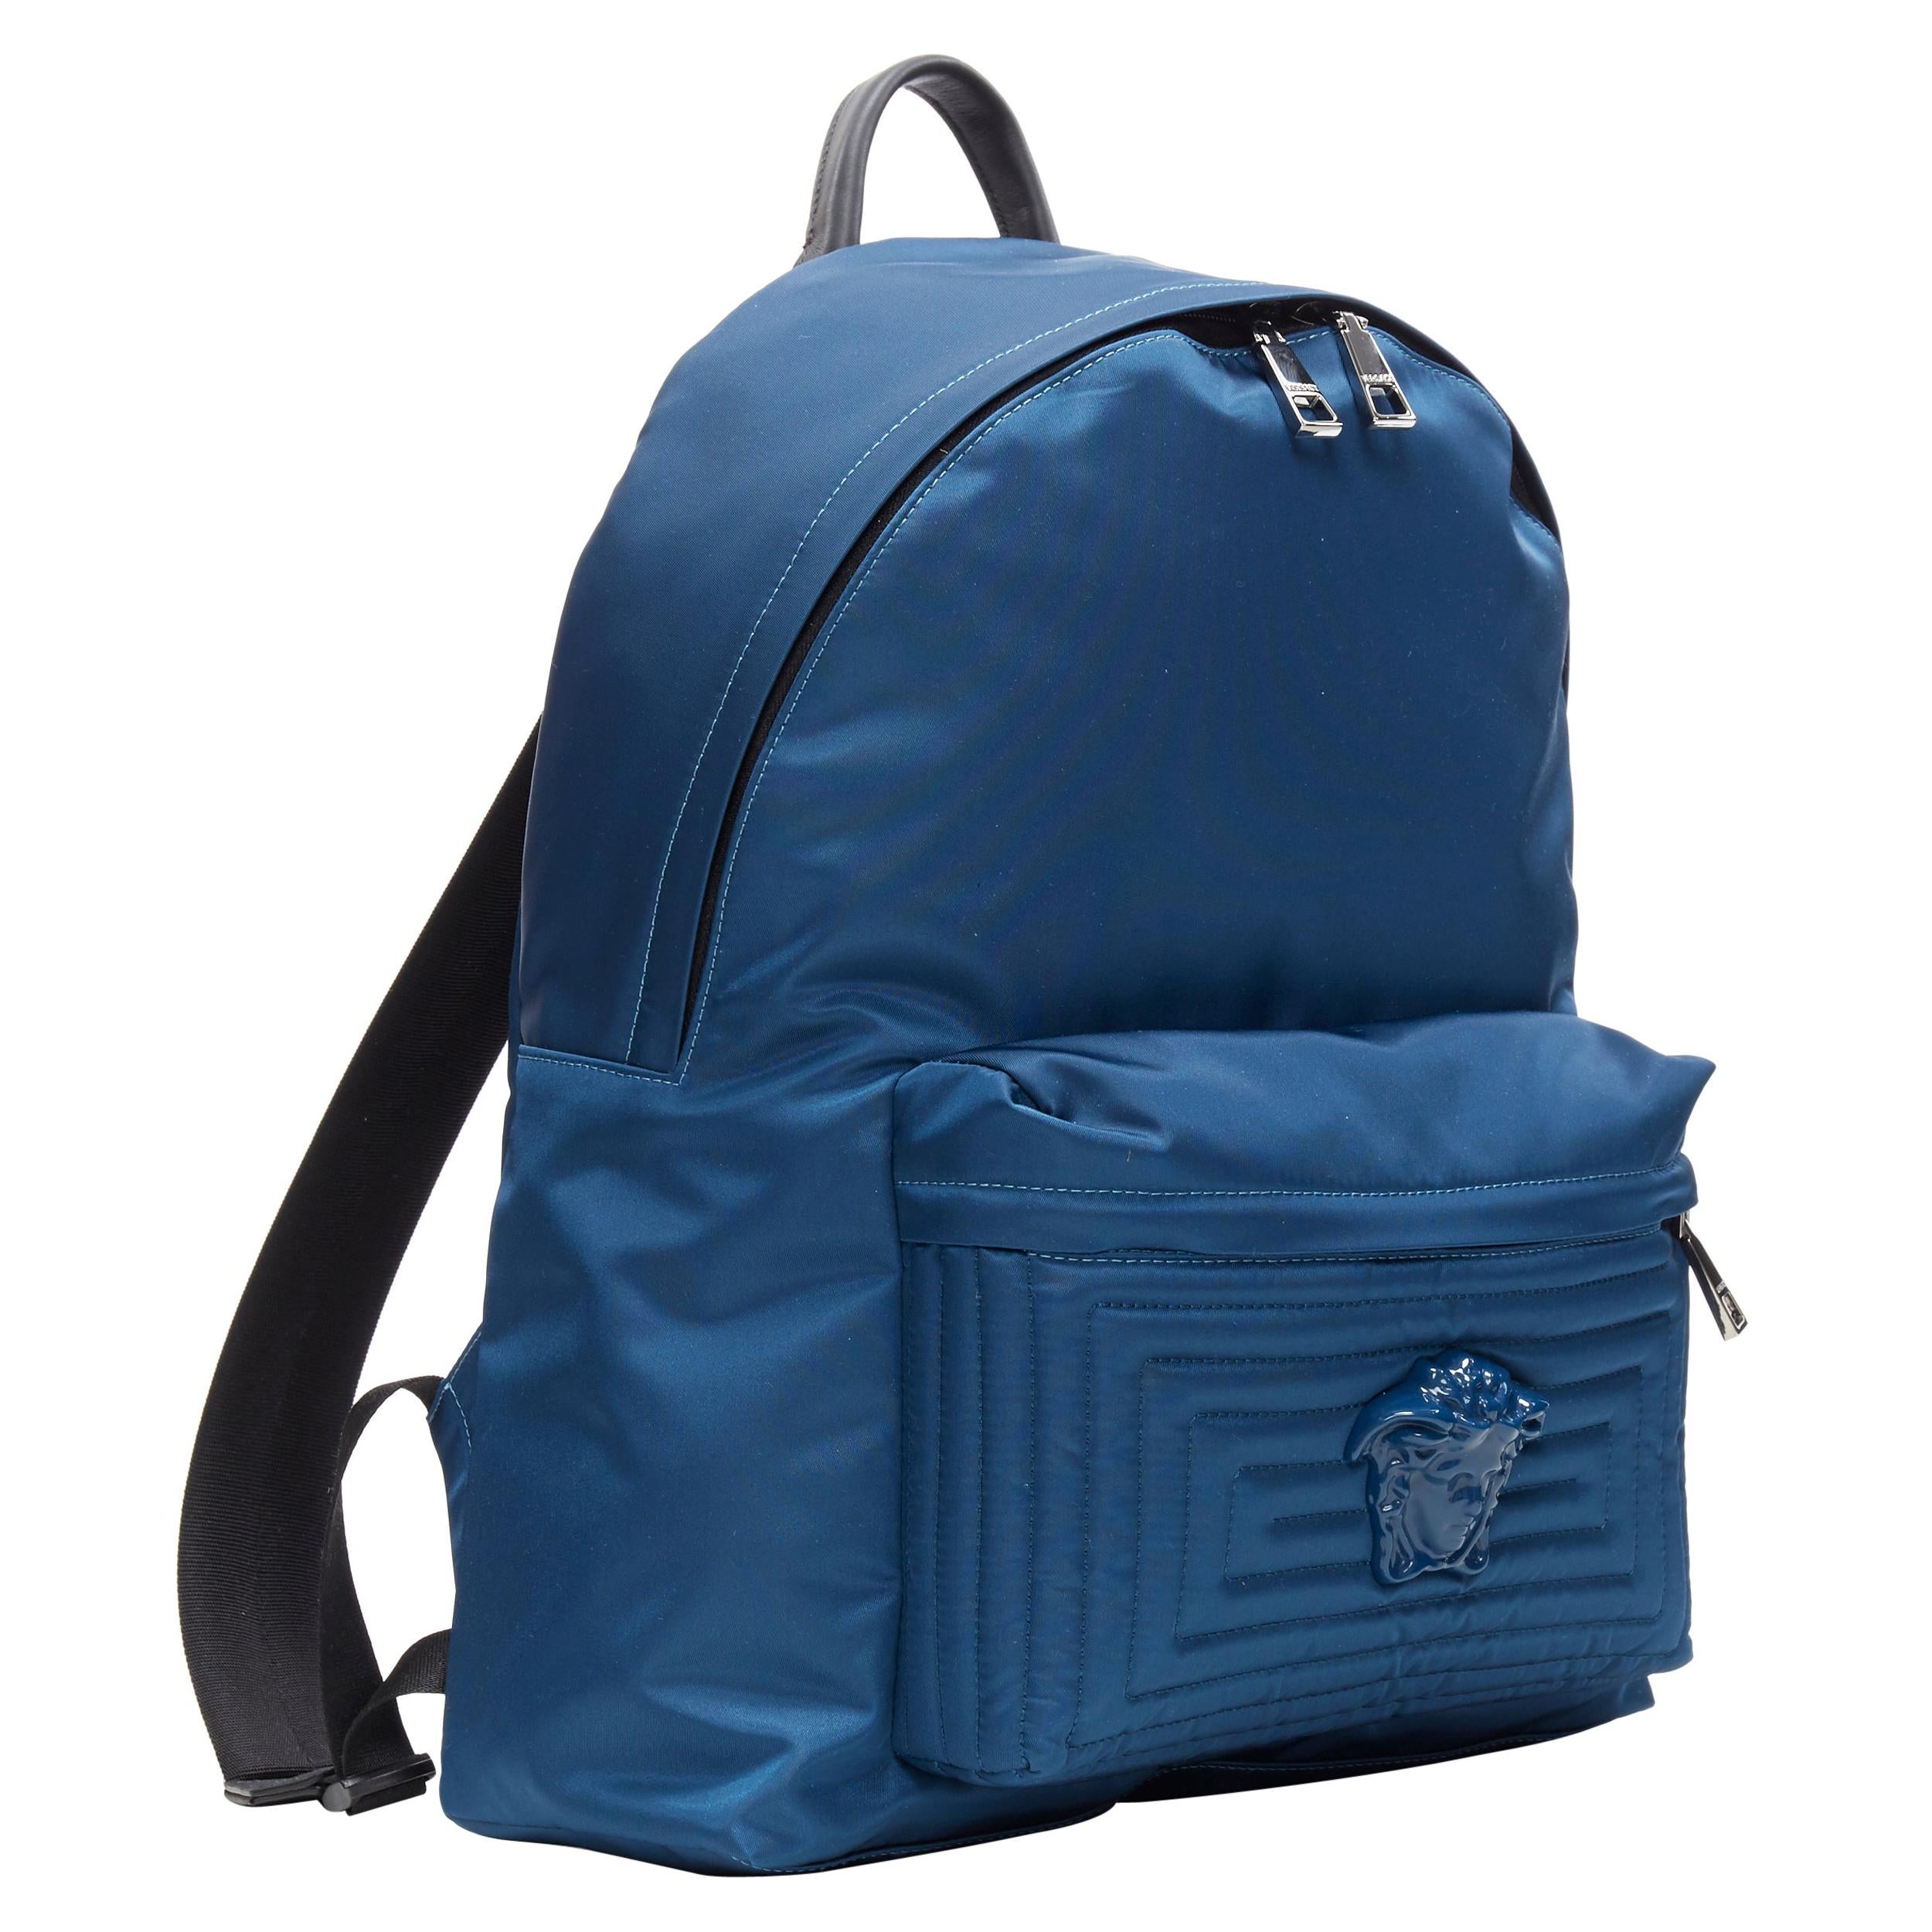 new VERSACE Palazzo Medusa navy blue nylon Greca pocket backpack bag